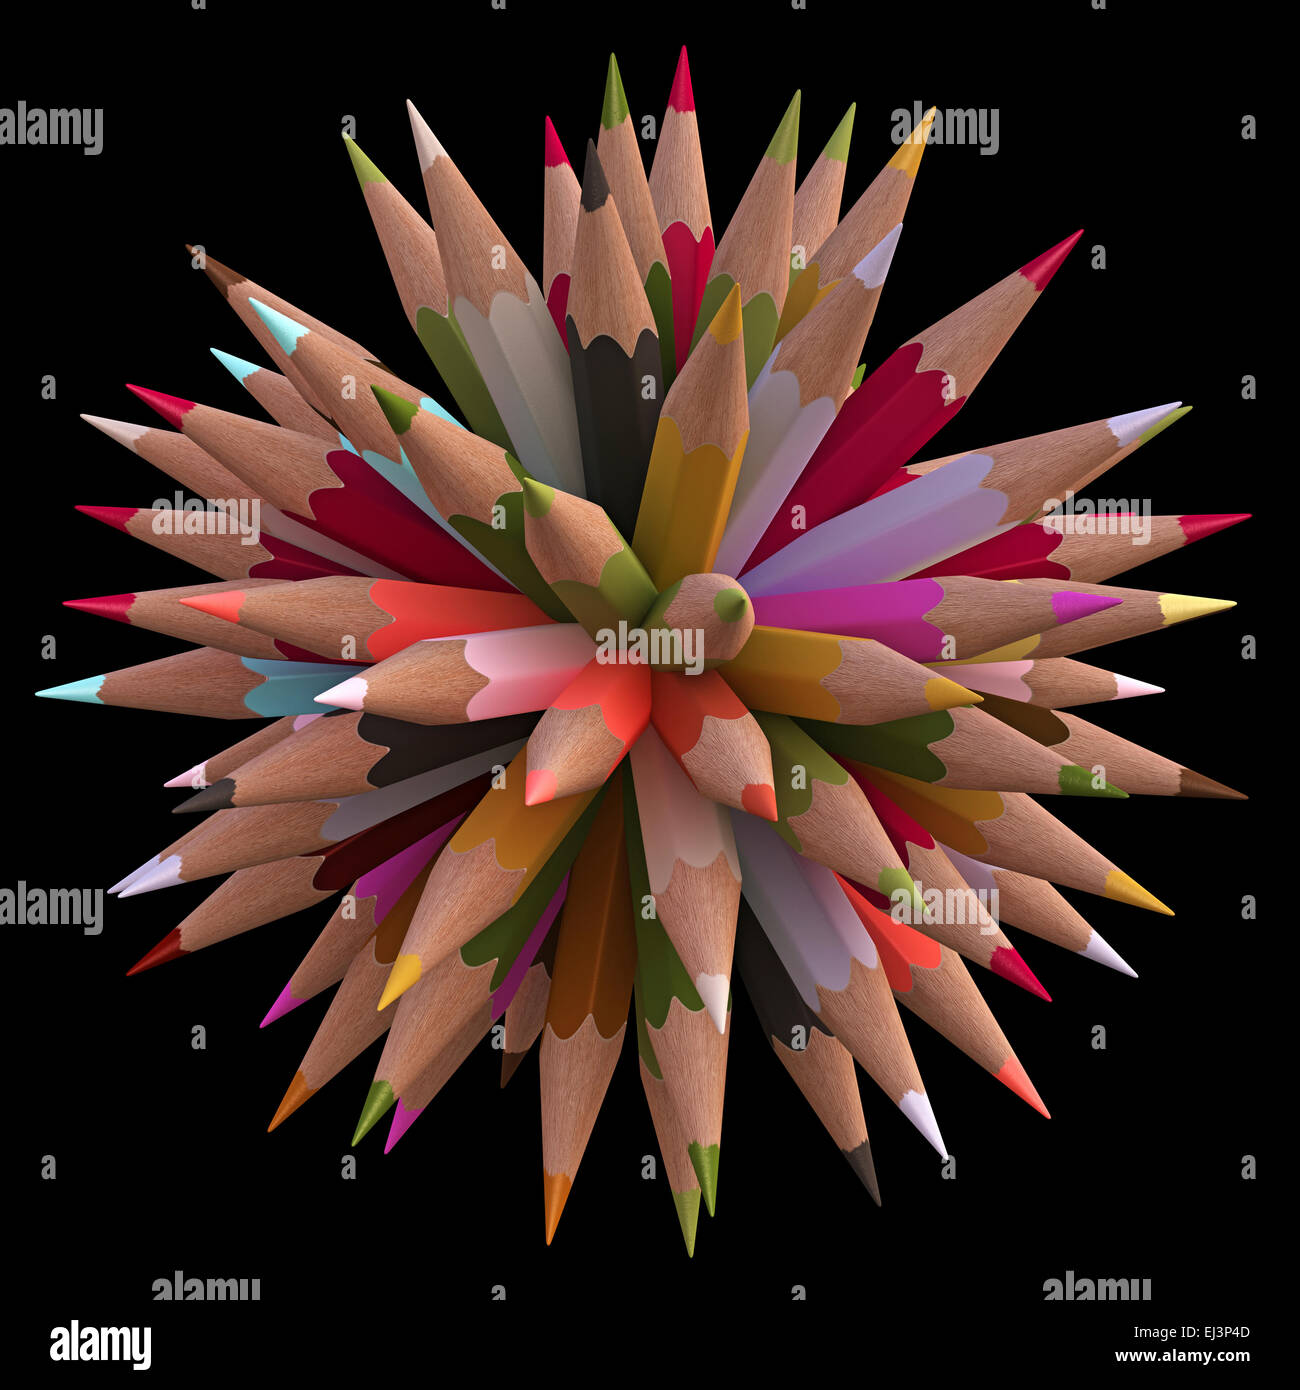 Colouring pencils, illustration Stock Photo